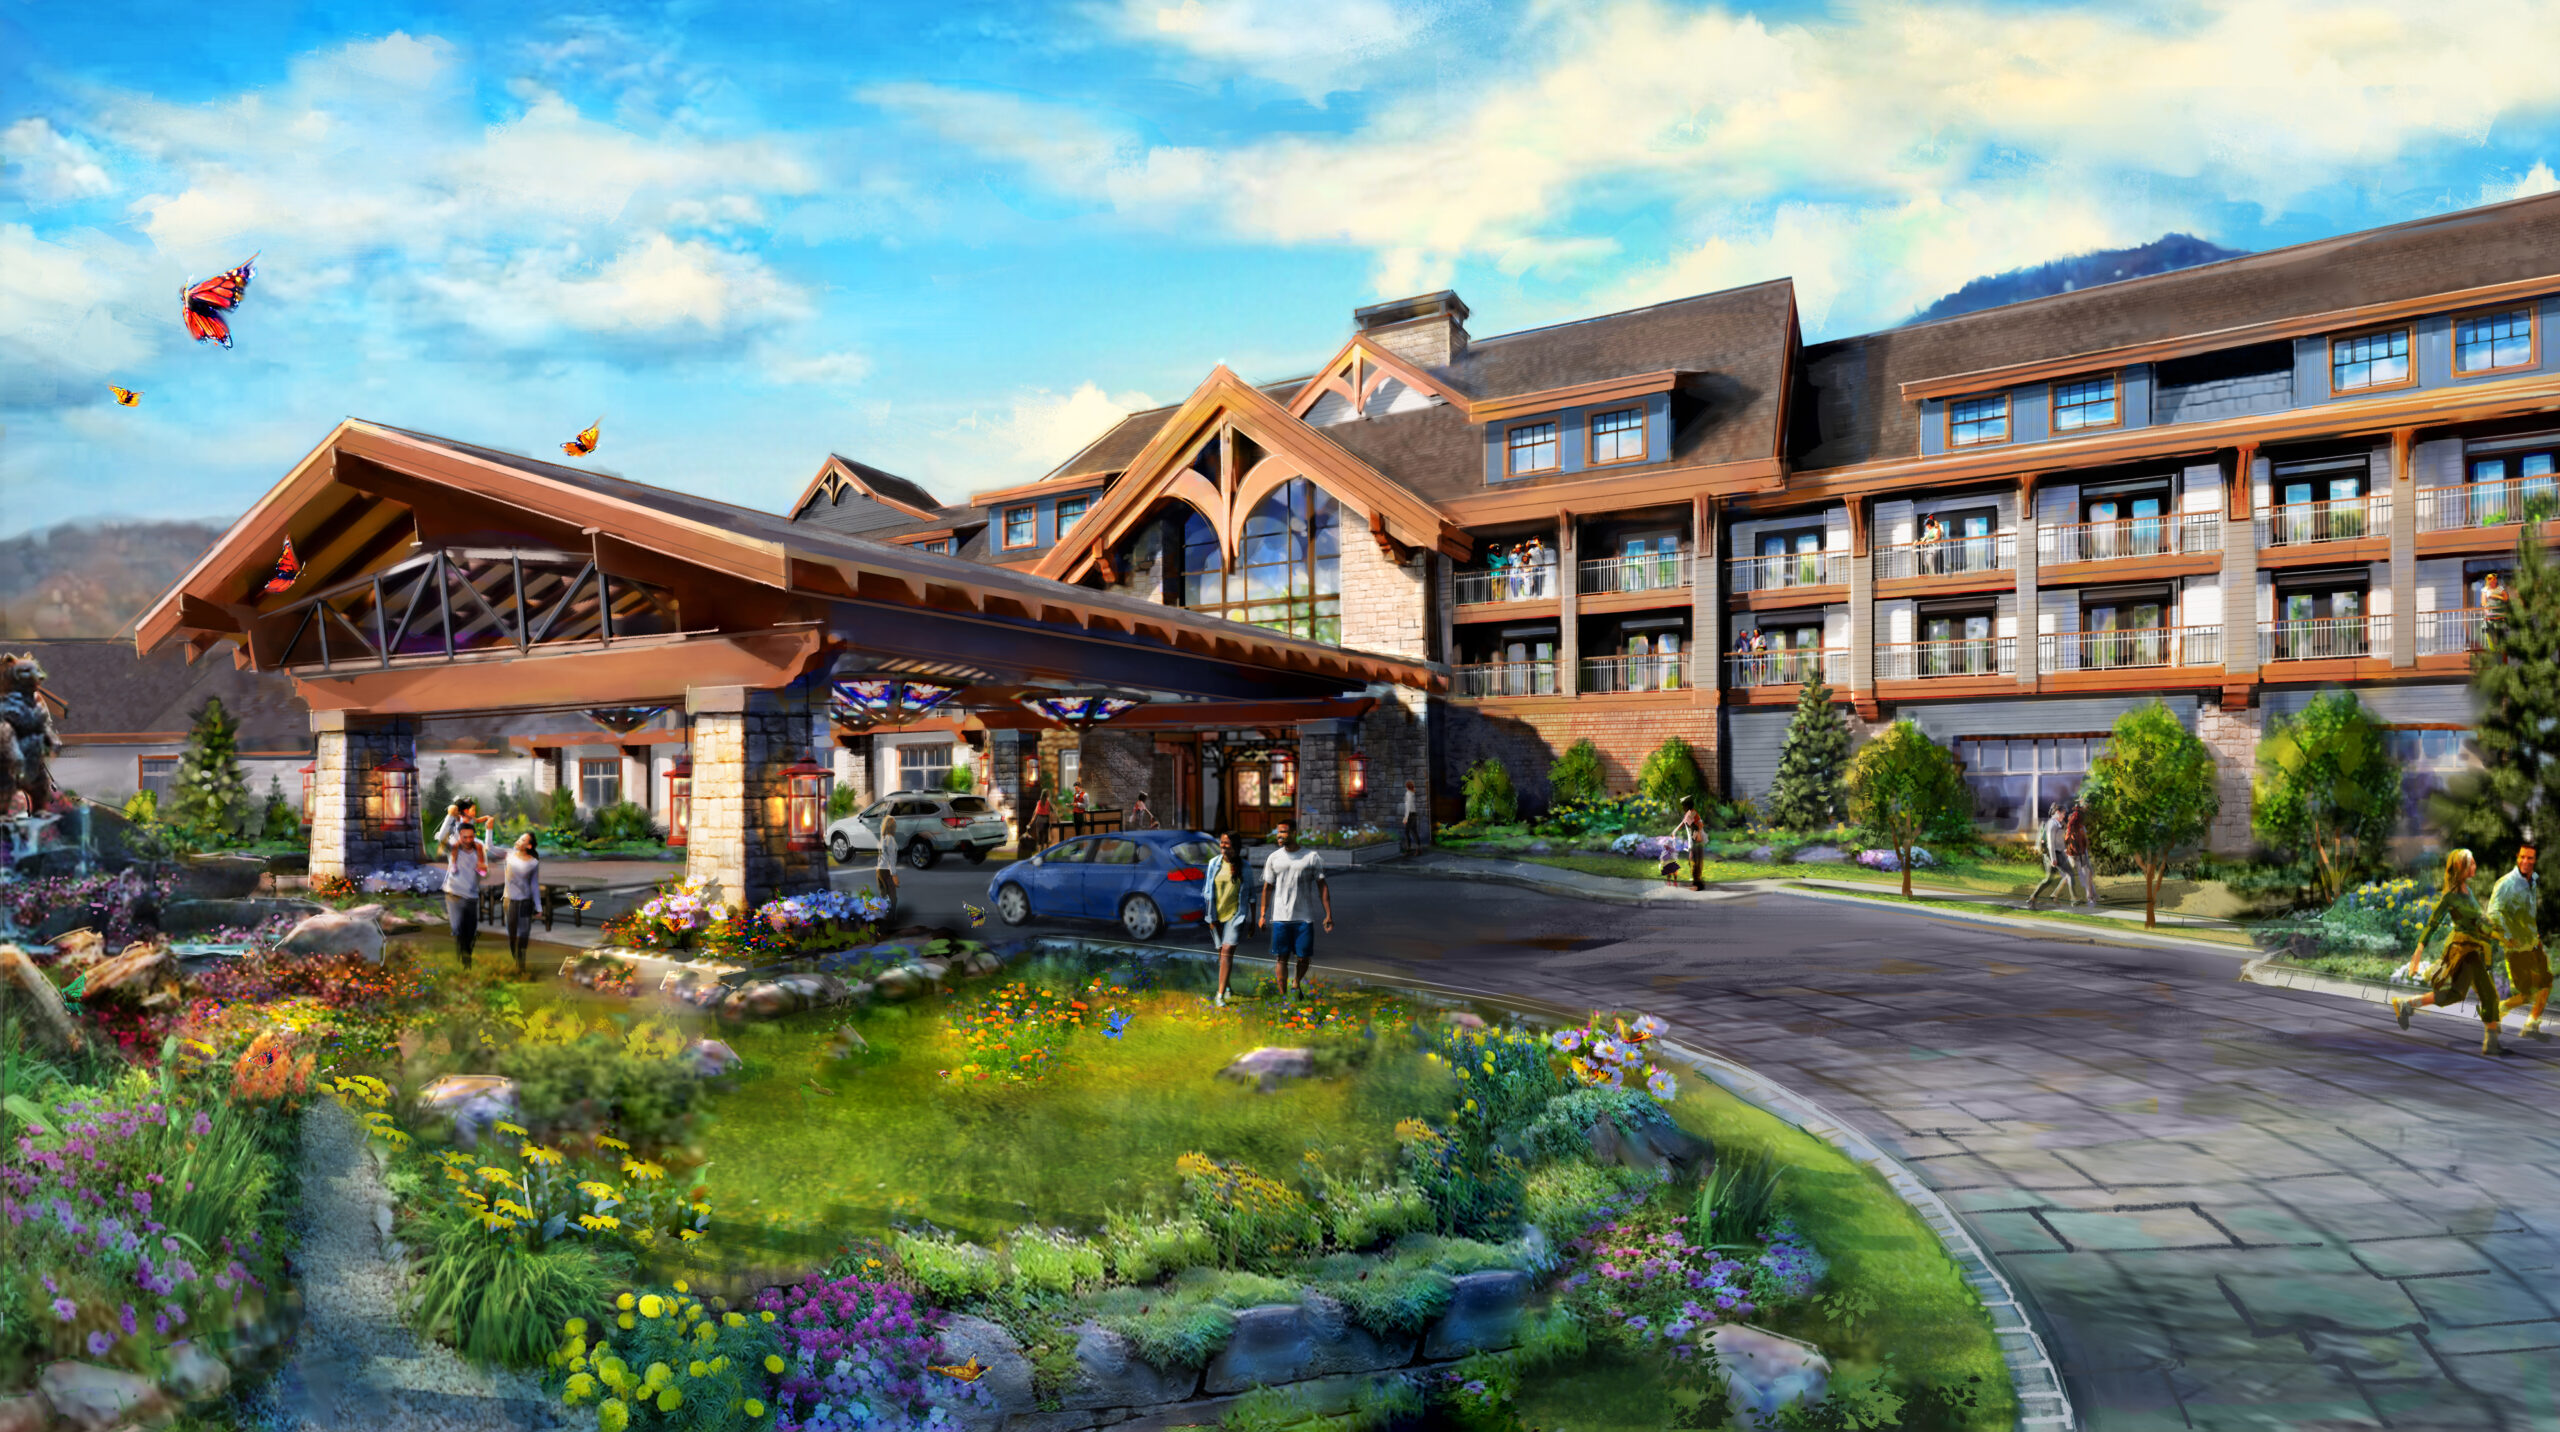 Dollywood announces new resort property, halfbillion dollar investment